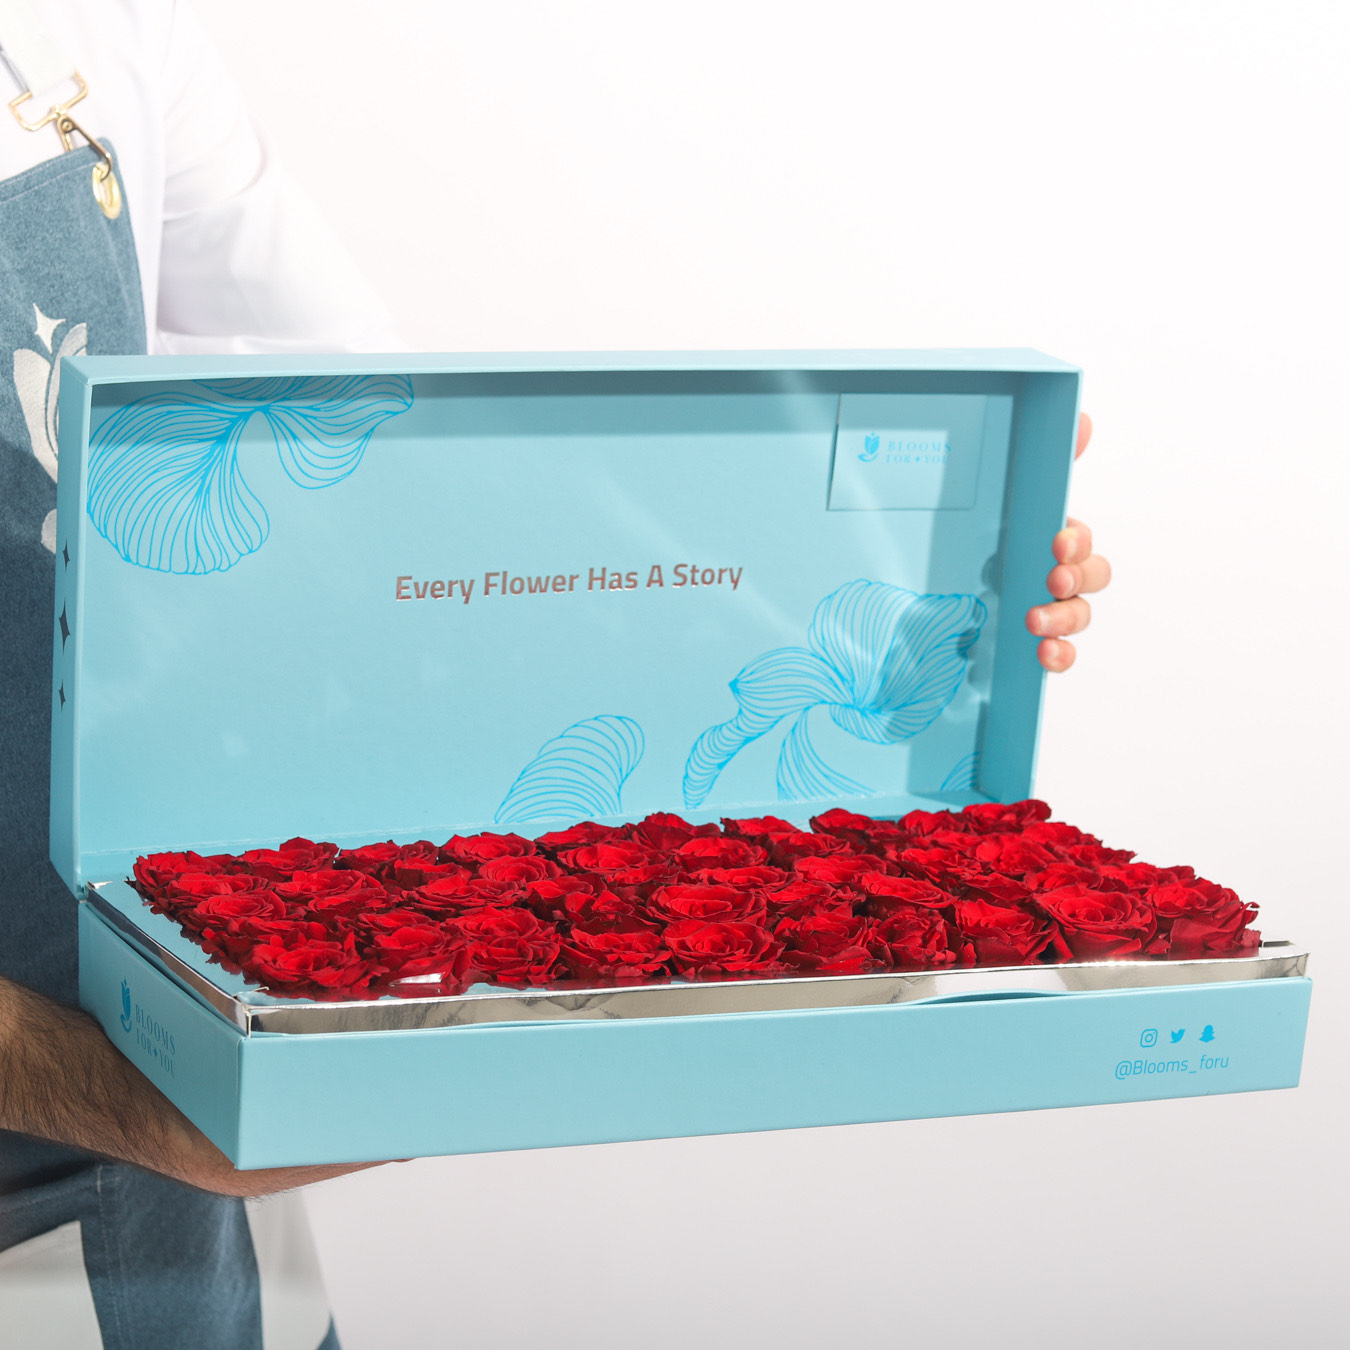 A gift for myself🥰 #CELINE #Flower #Jisoo